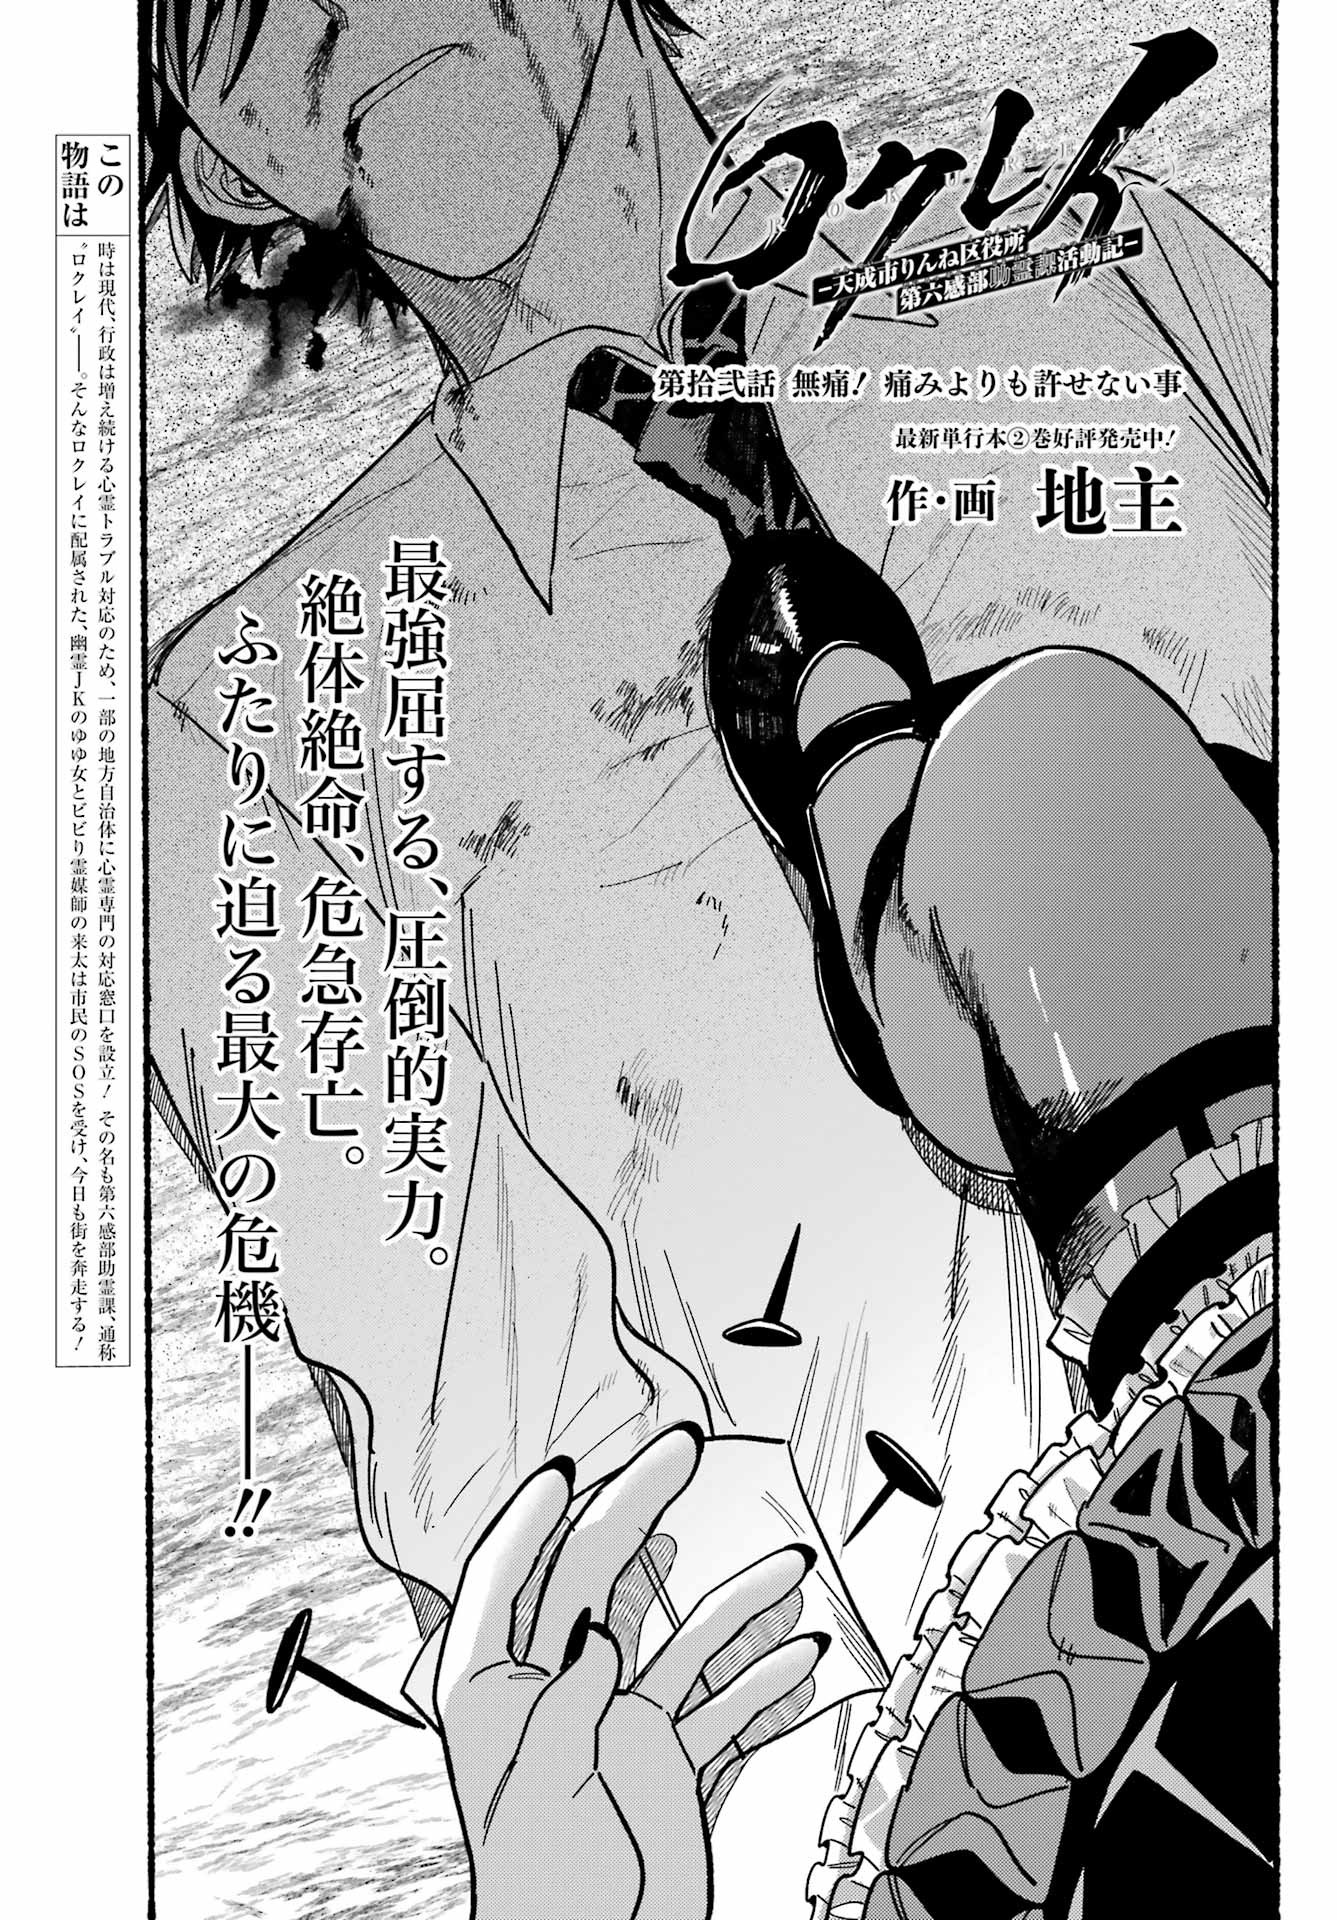 Rokurei - Tenseishi Rinne Kuyakusho Dairokkanbu Joreika Katsudouki - Chapter 12 - Page 3